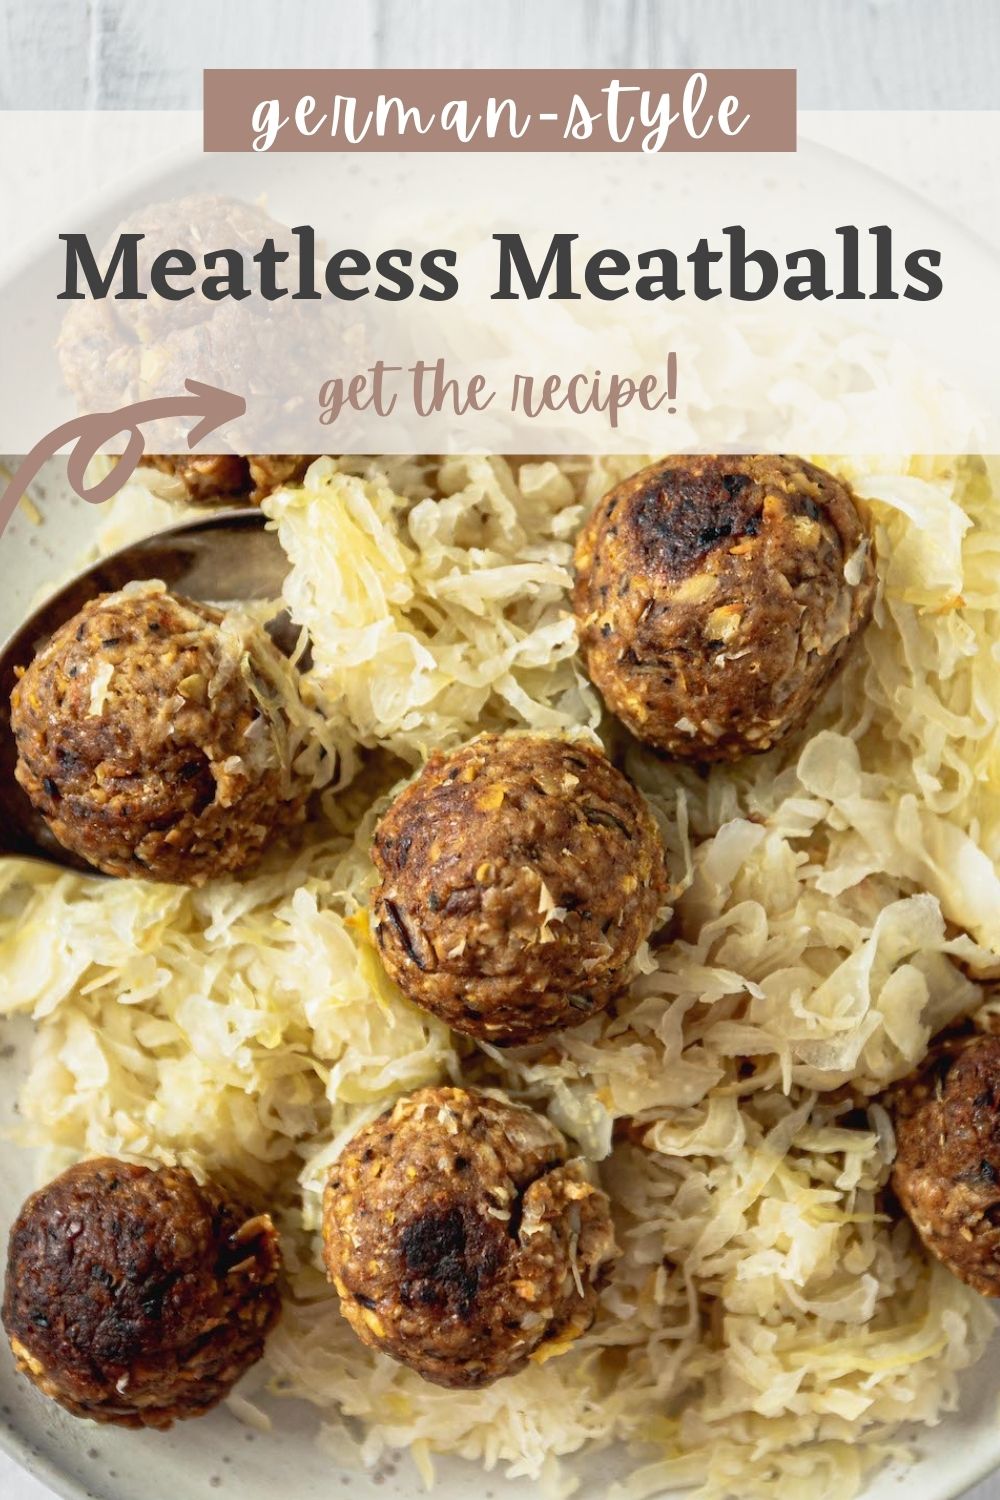 Meatless Meatballs with Sauerkraut - Spoonful of Kindness